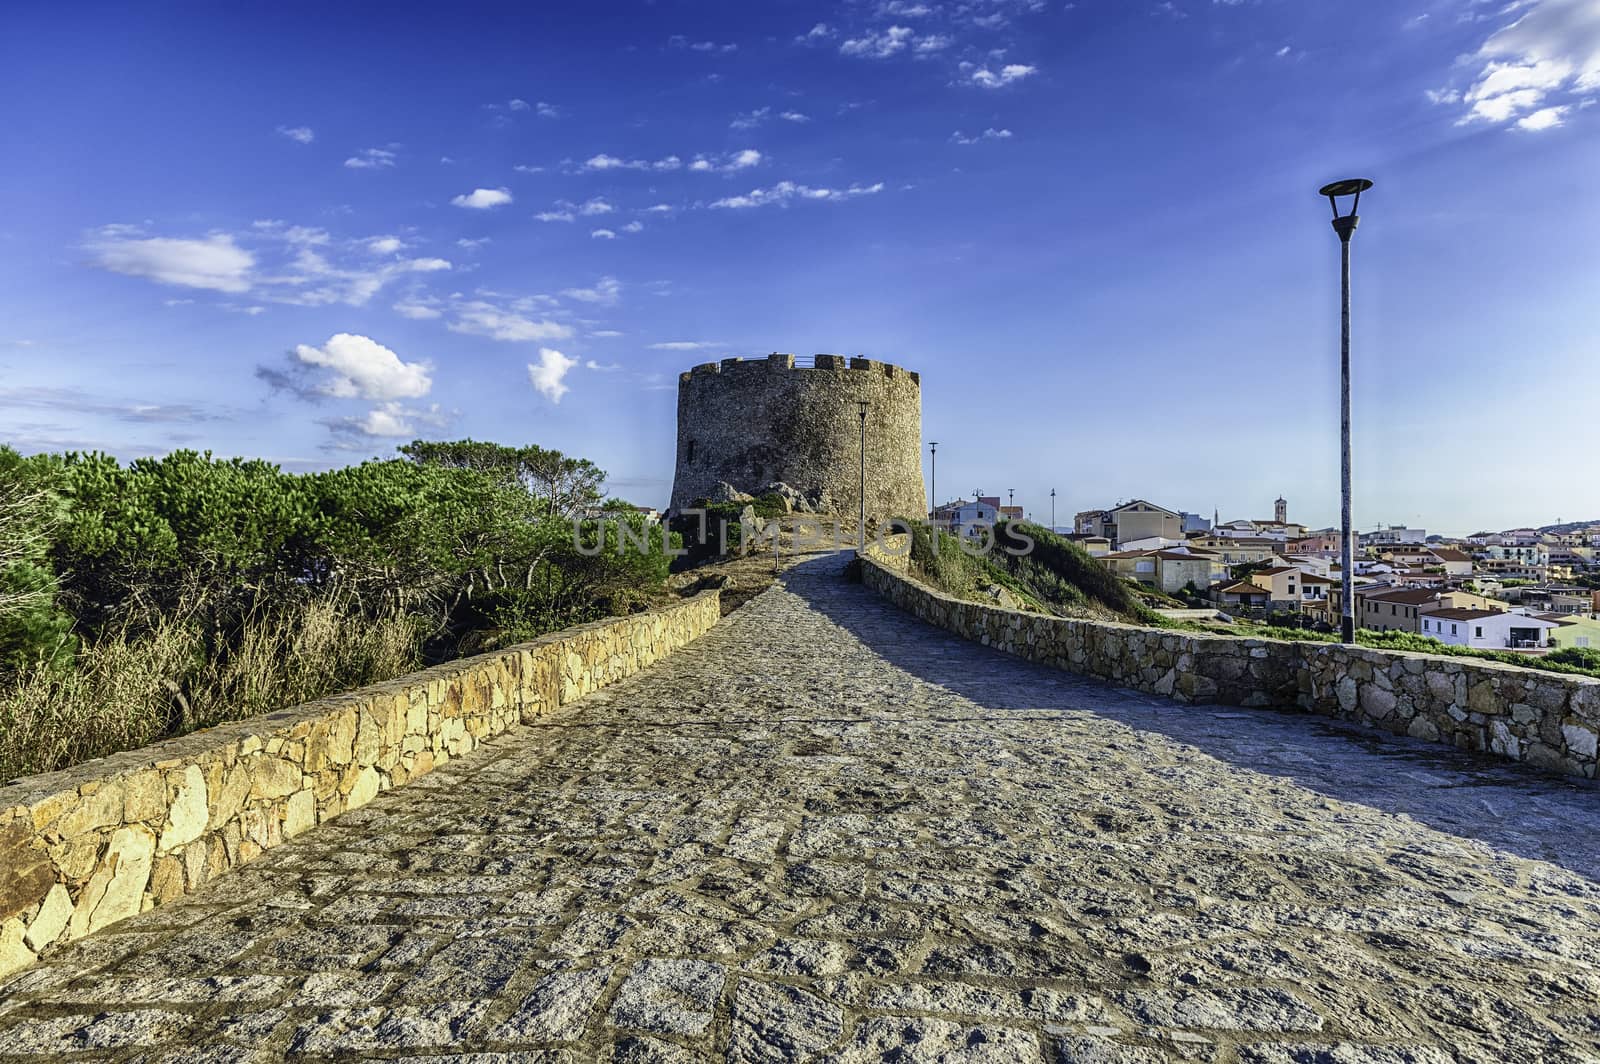 Longonsardo tower, iconic landmark in Santa Teresa Gallura, Sard by marcorubino